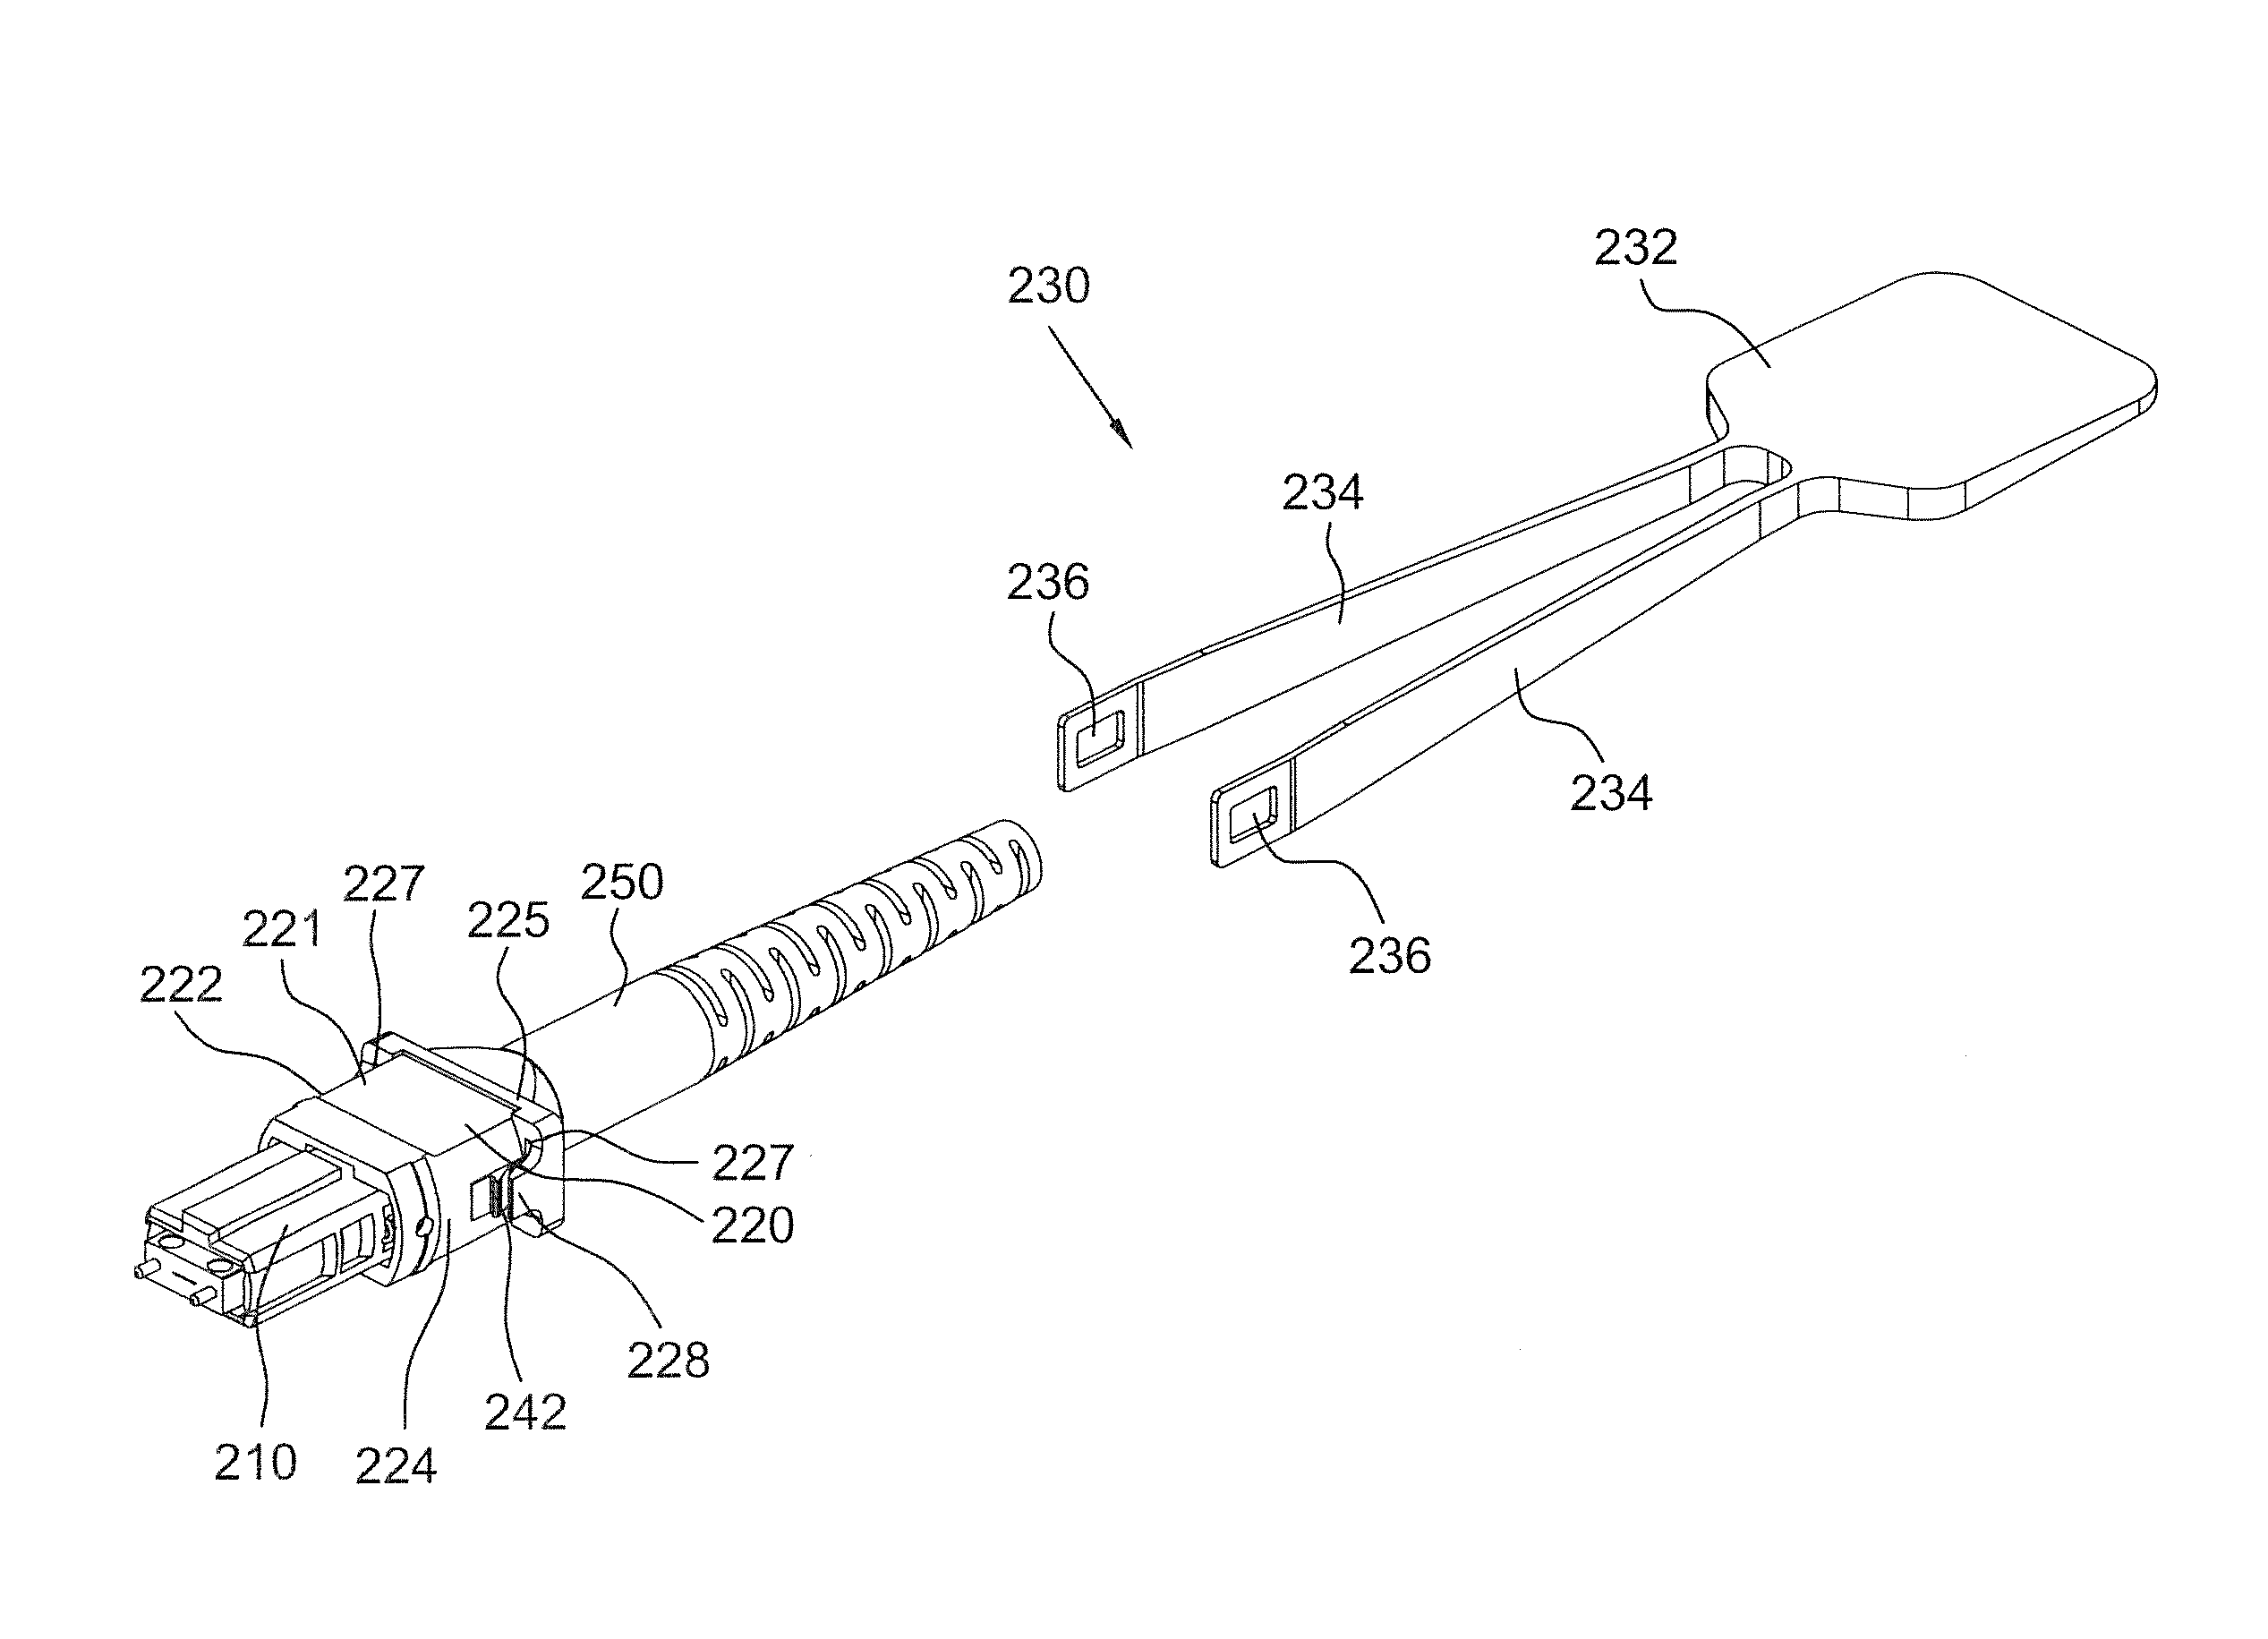 Optical fiber connector with handling member